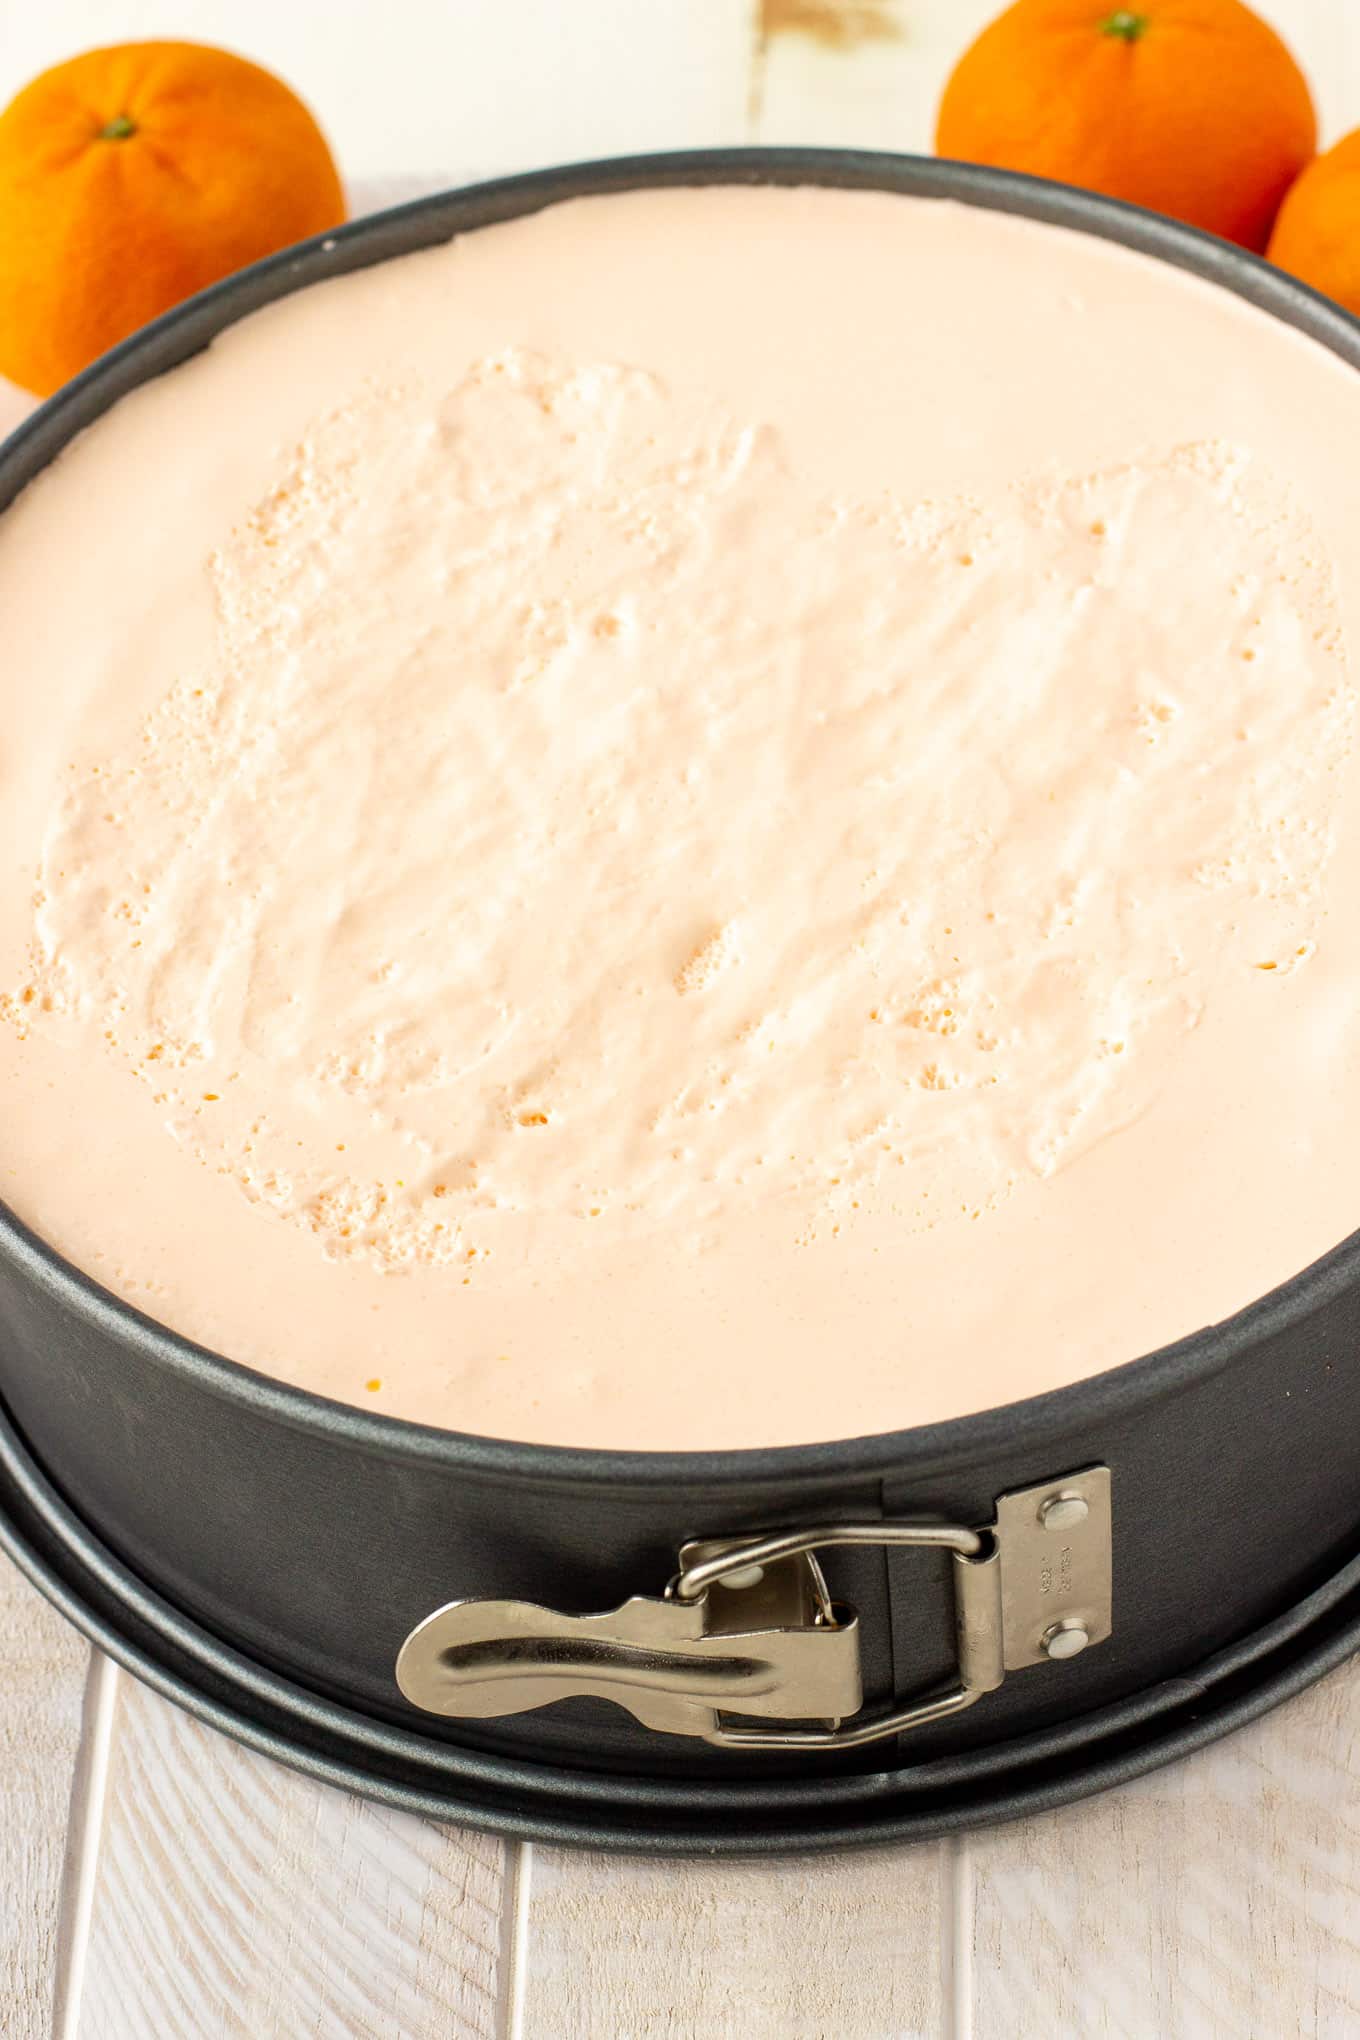 Creamy orange pie in a cheesecake pan.